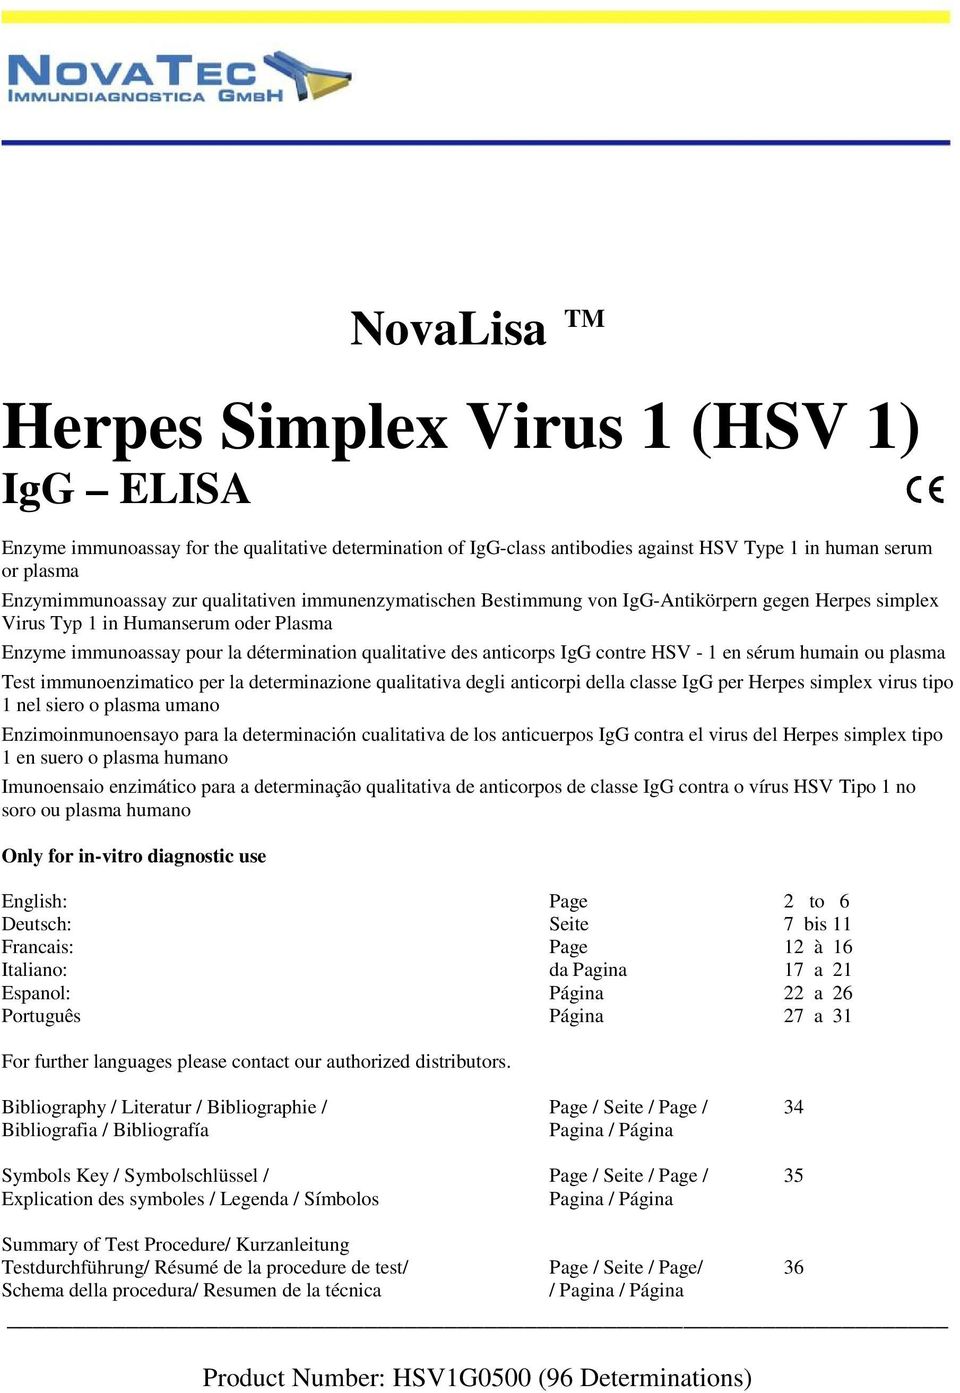 core maze pageant Herpes Simplex Virus 1 (HSV 1) IgG ELISA - PDF Descargar libre